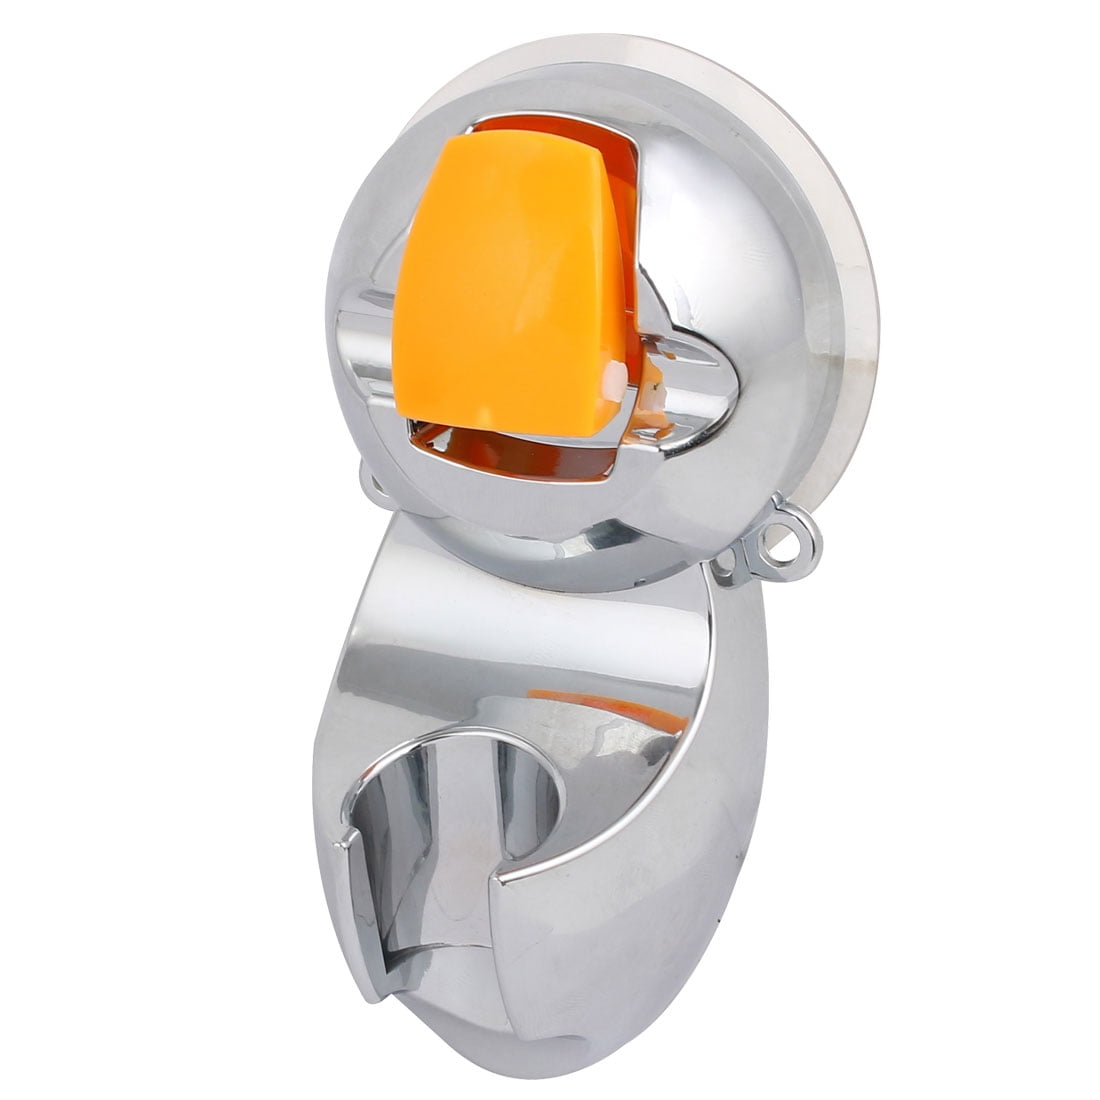 Shower Head Holder Angle Adjustable Vacuum Suction Cup Bathroom Wall Mount  txk 